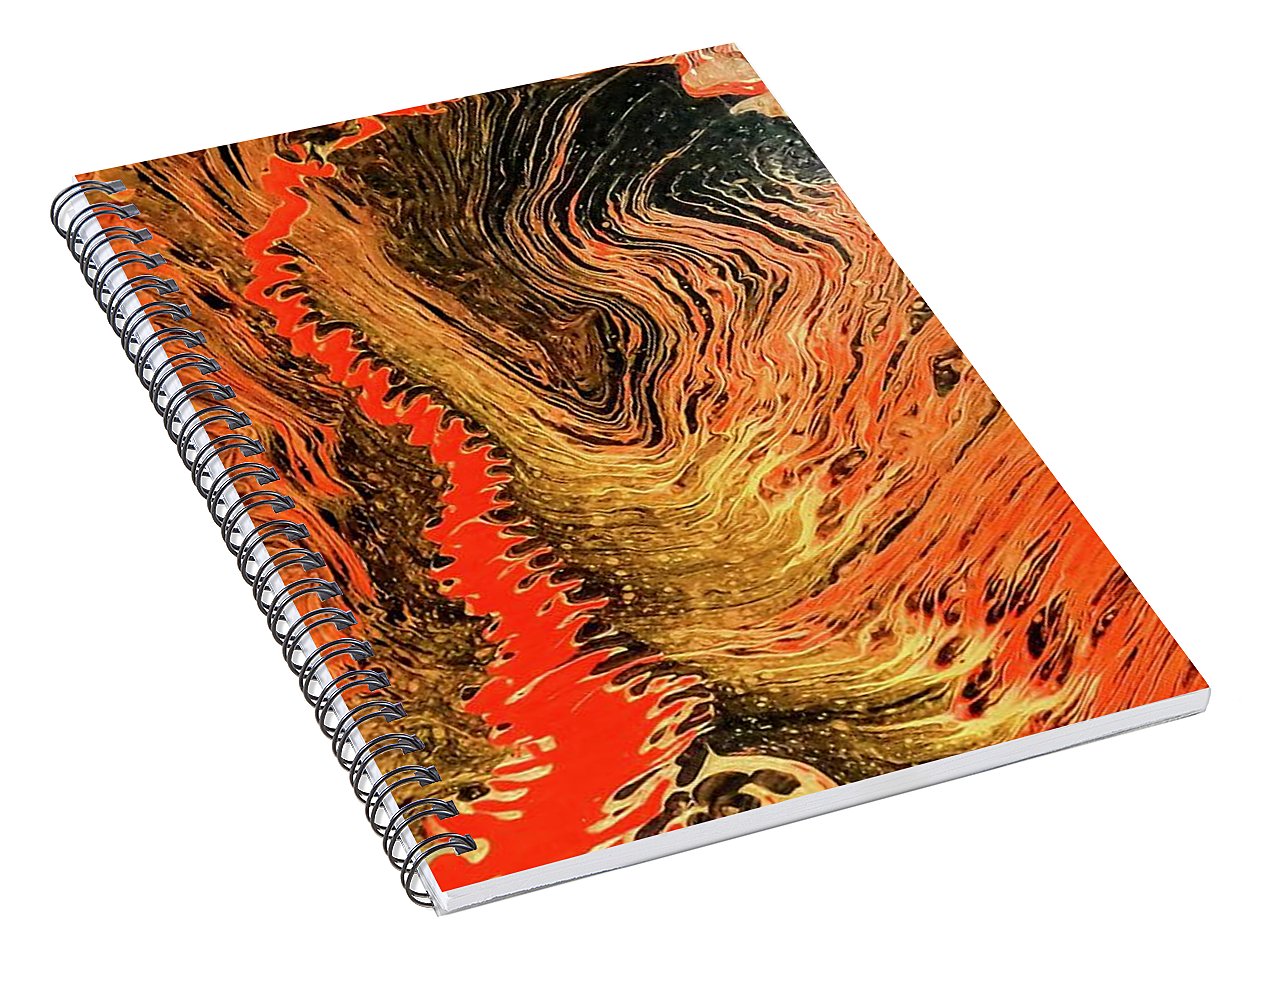 Stream - Fine Art Print Spiral Notebook